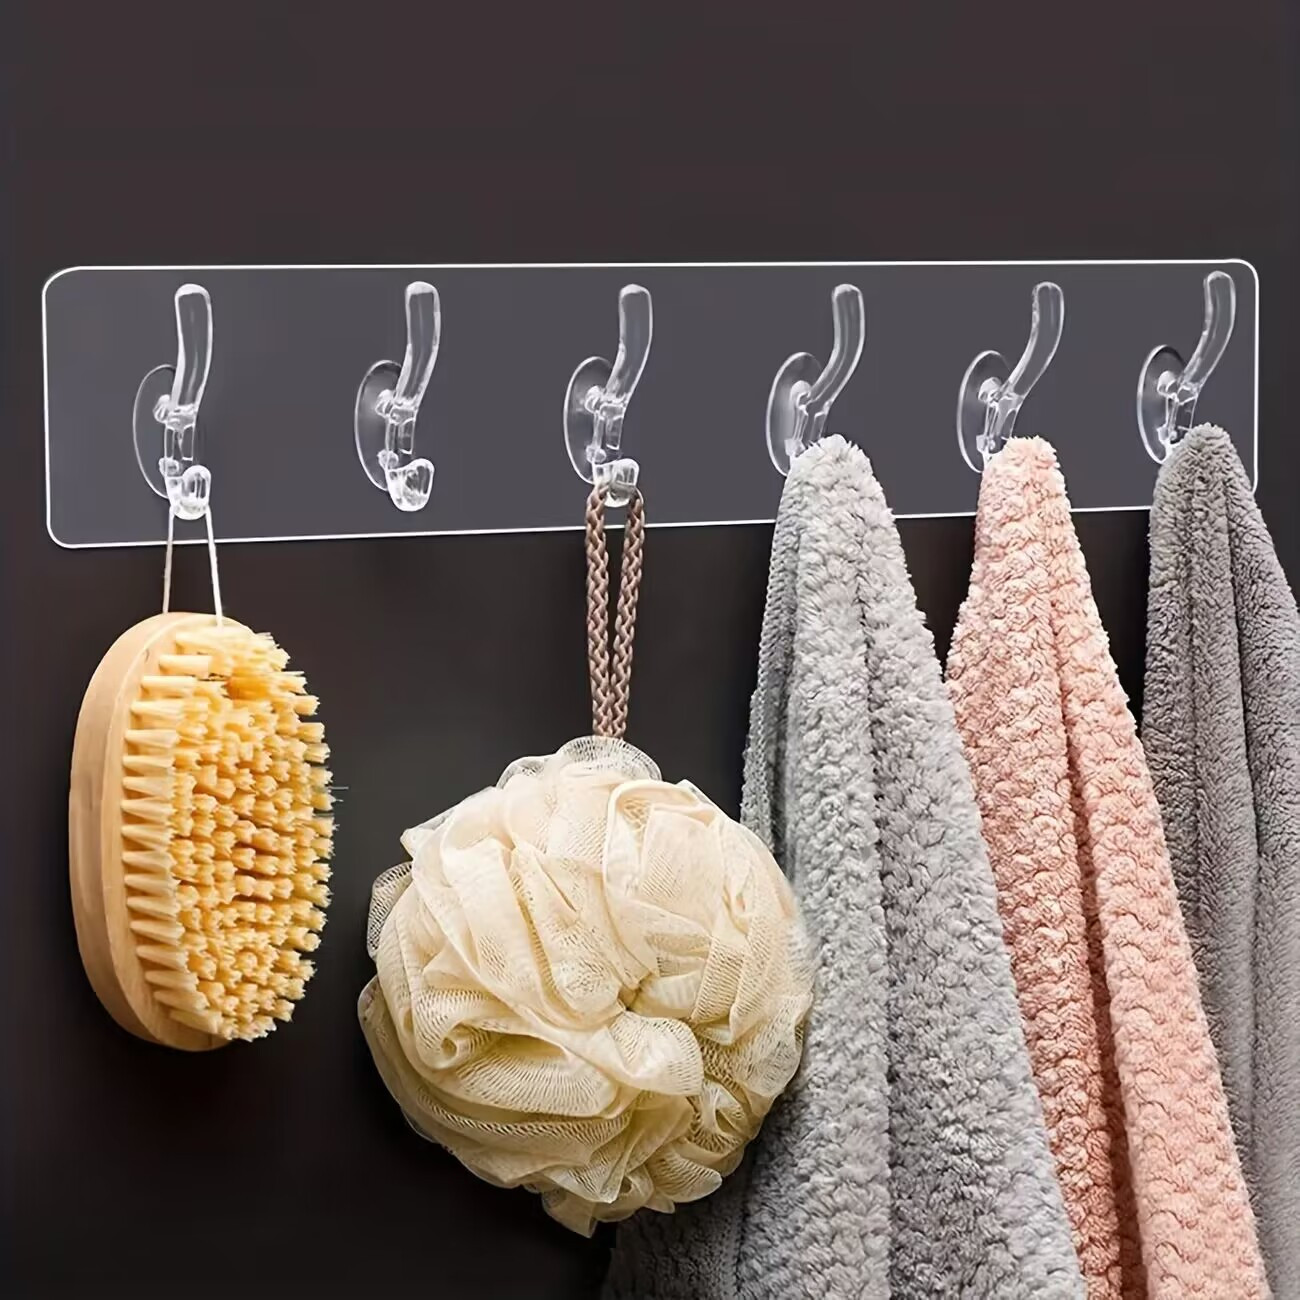 Adhesive Sticky Hooks, Self Adhesive Towel Hooks Waterproof Shower